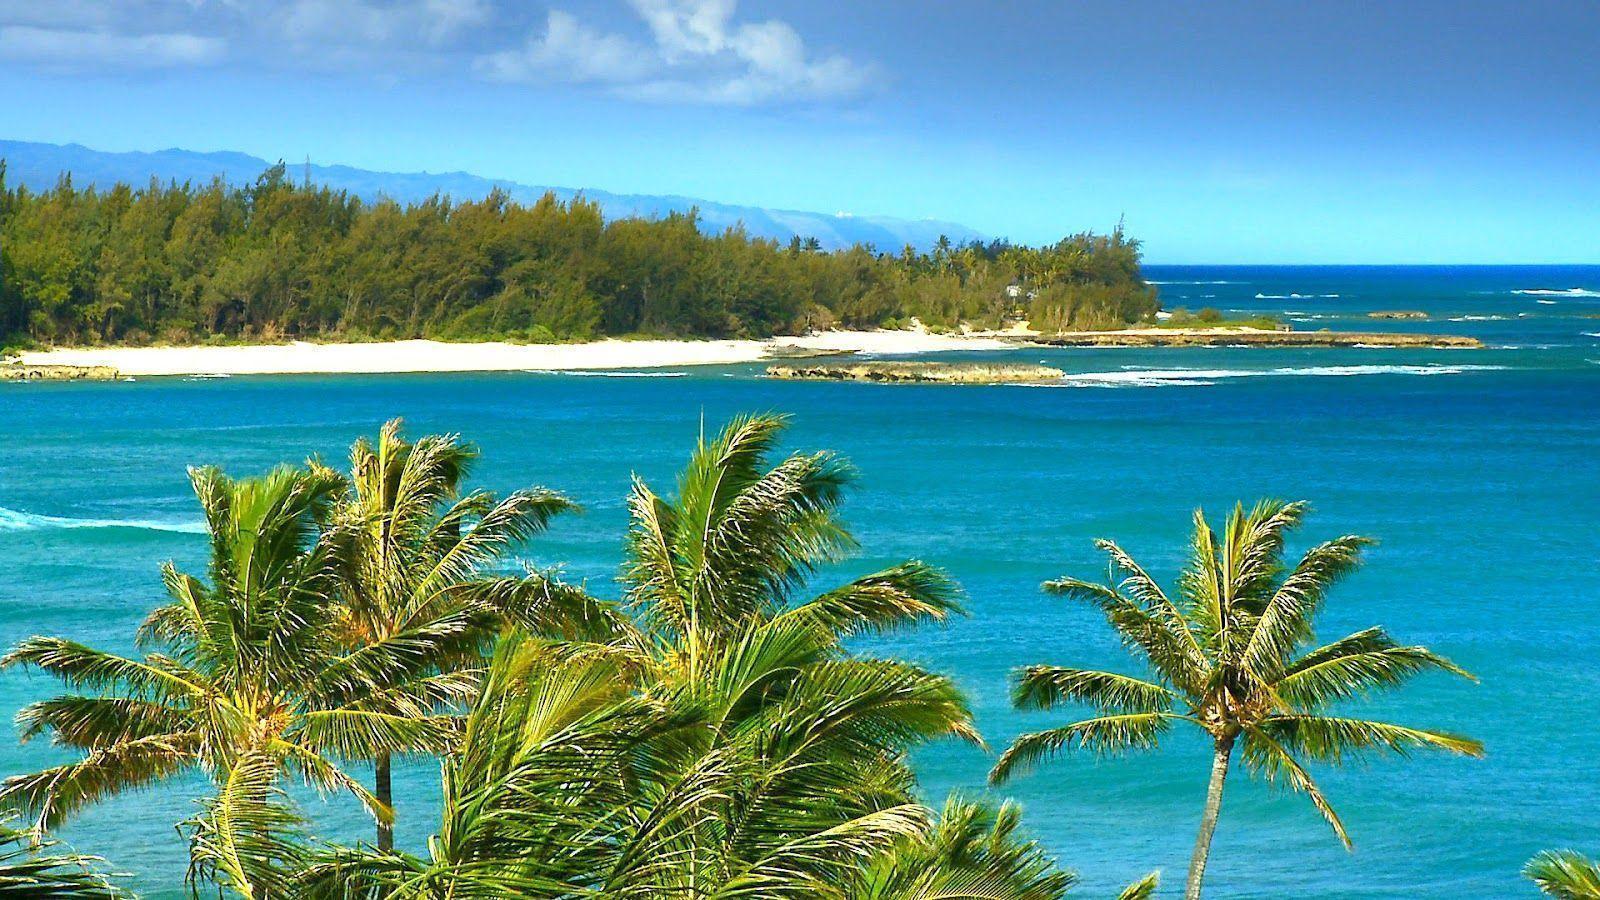 Hawaiian Beach House Rentals Wallpaper 1600x900 px Free Download